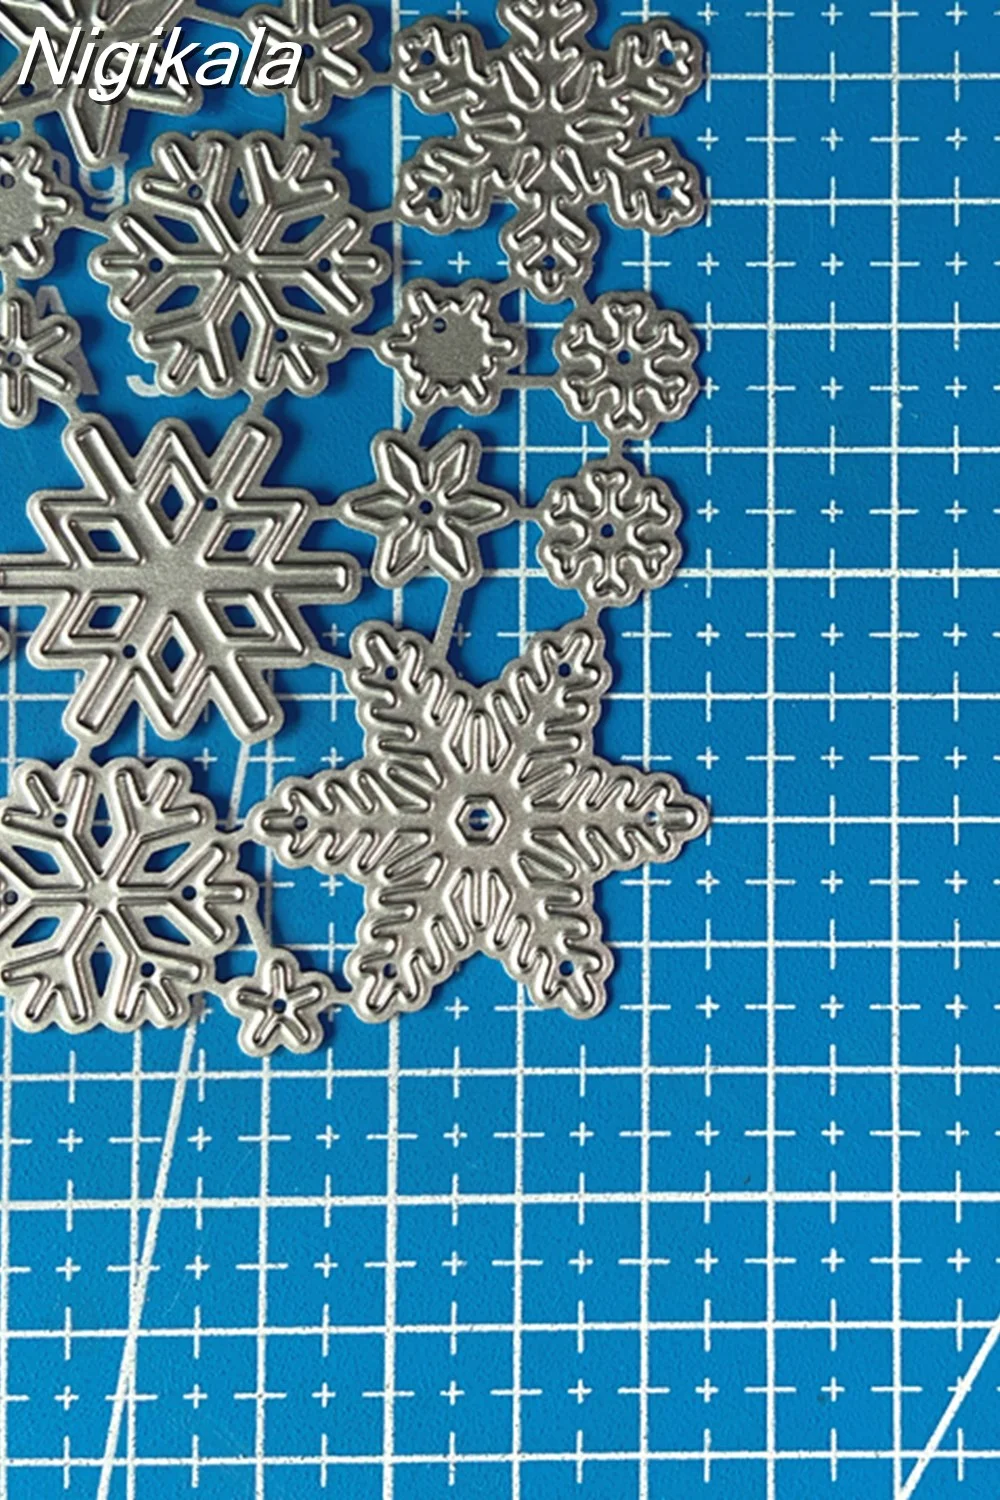 Nigikala Goddess Metal Cutting Dies Small Snowflake set diy Scrapbooking Photo Album Decorative Embossing Paper Card Crafts Die